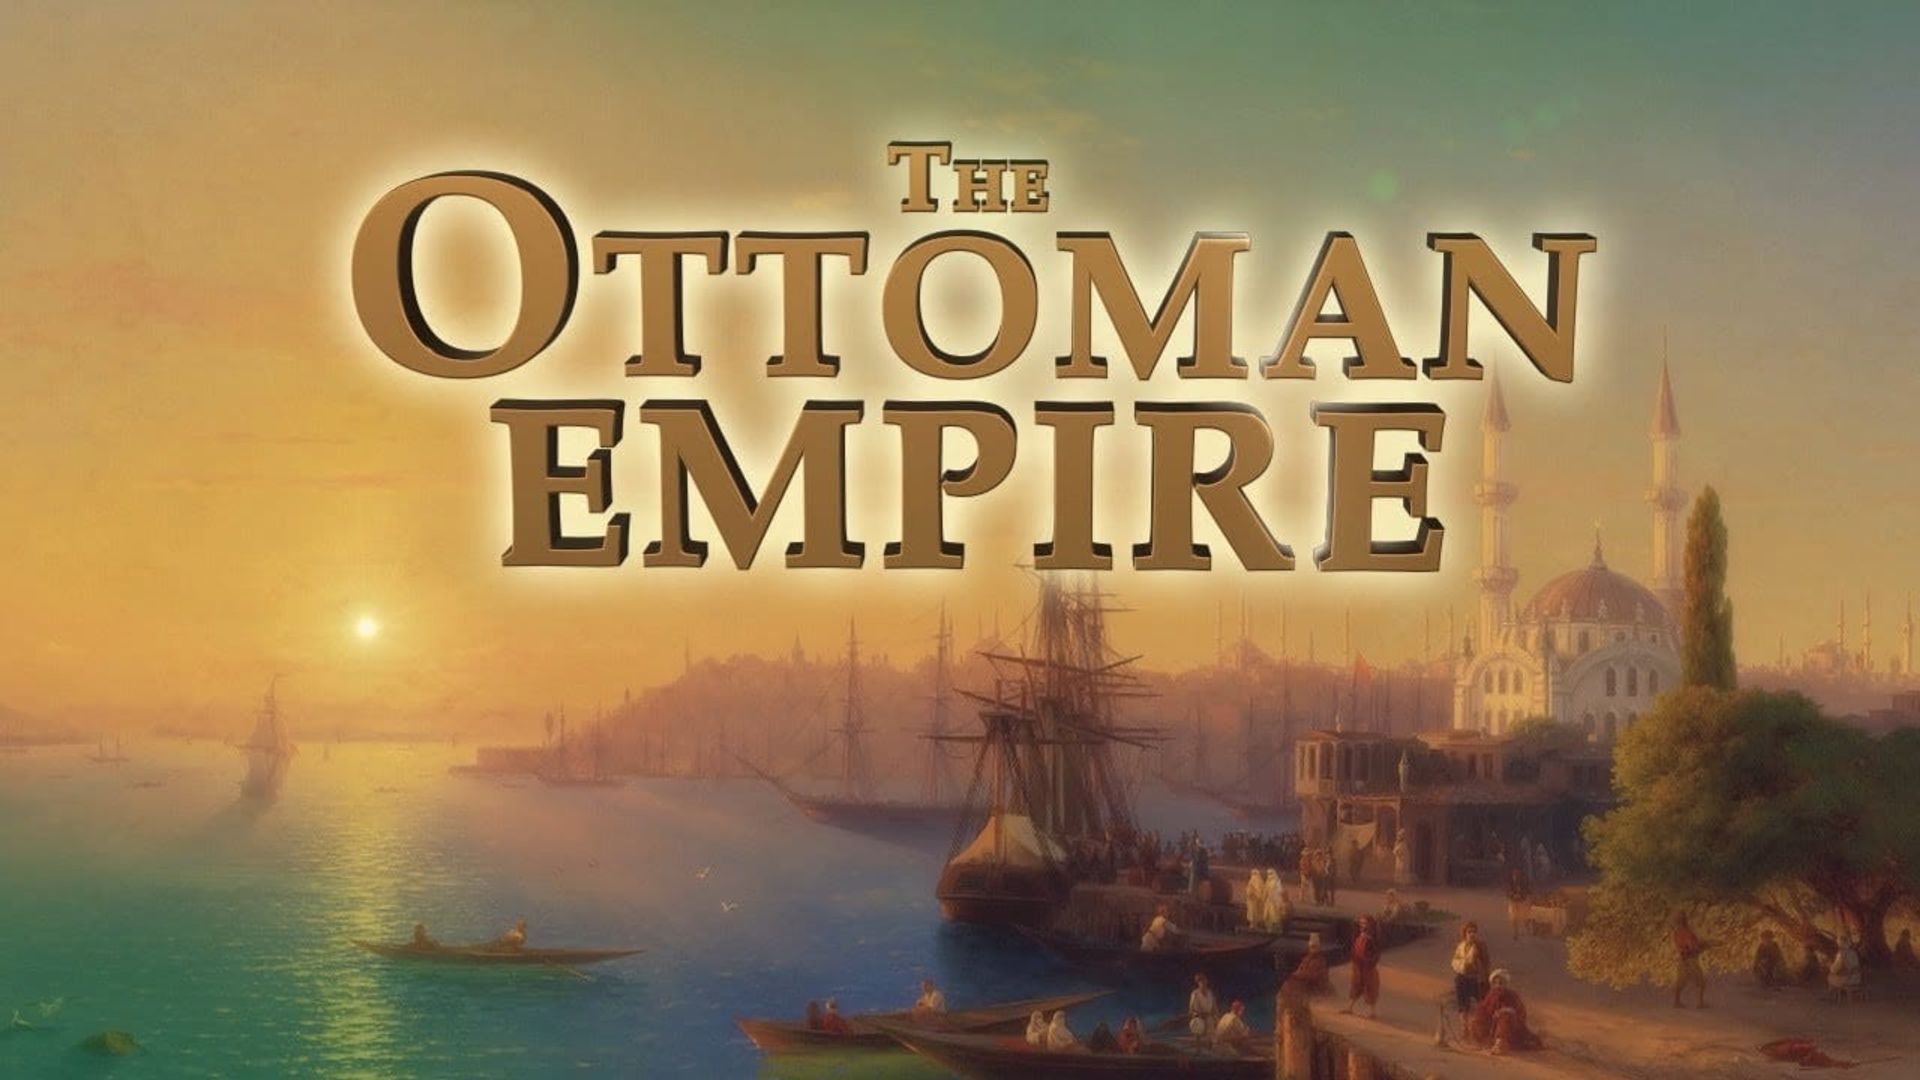 The Ottoman Empire background